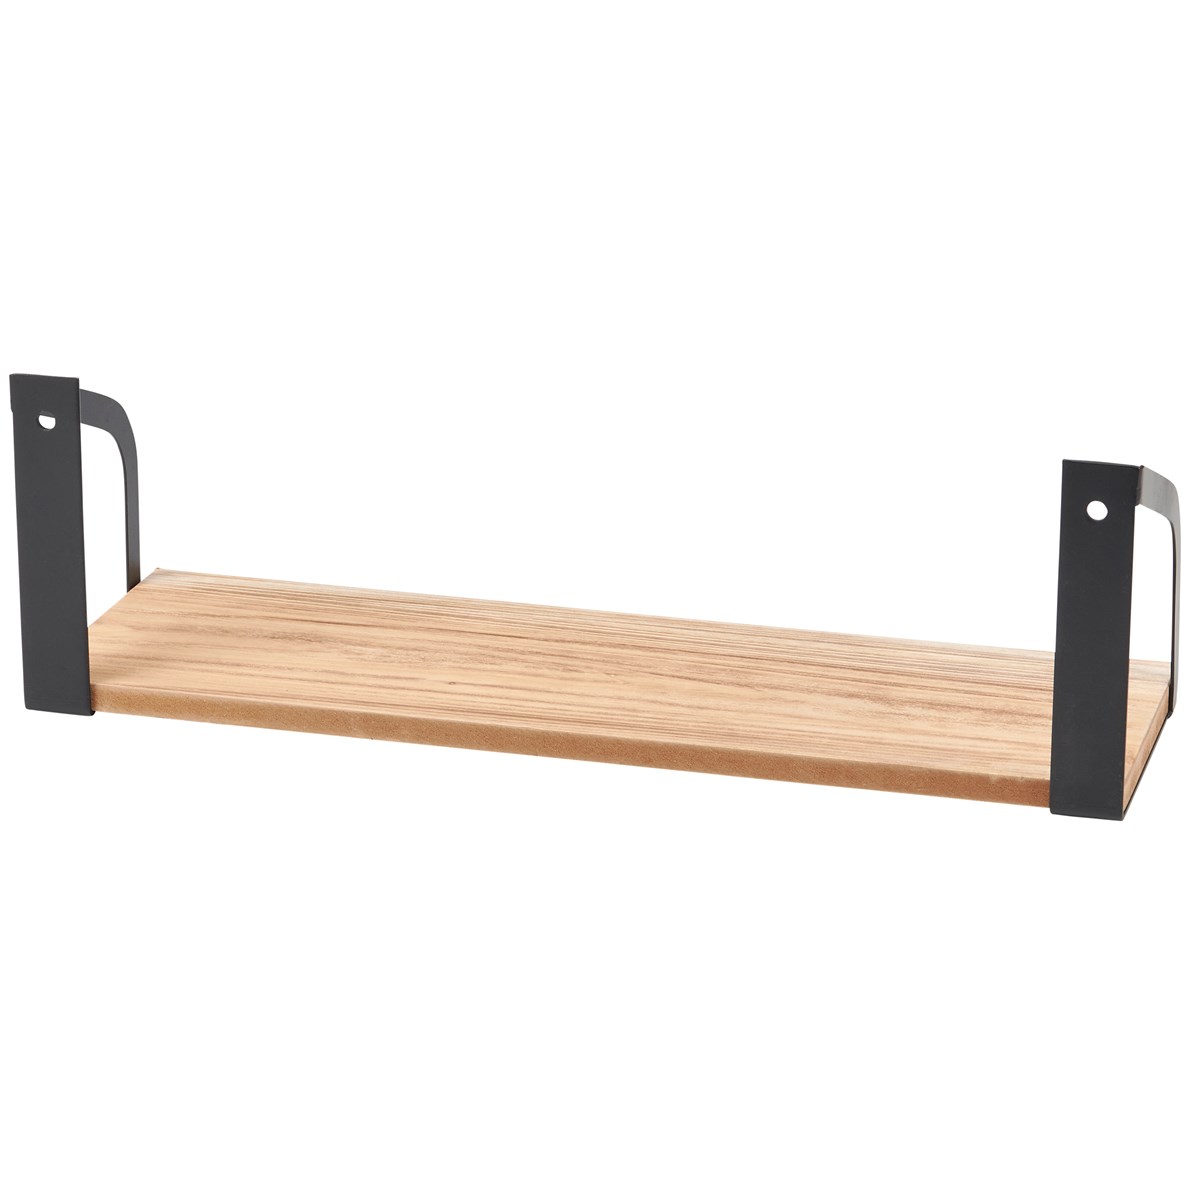 Floating Shelf Set - Wood, Metal